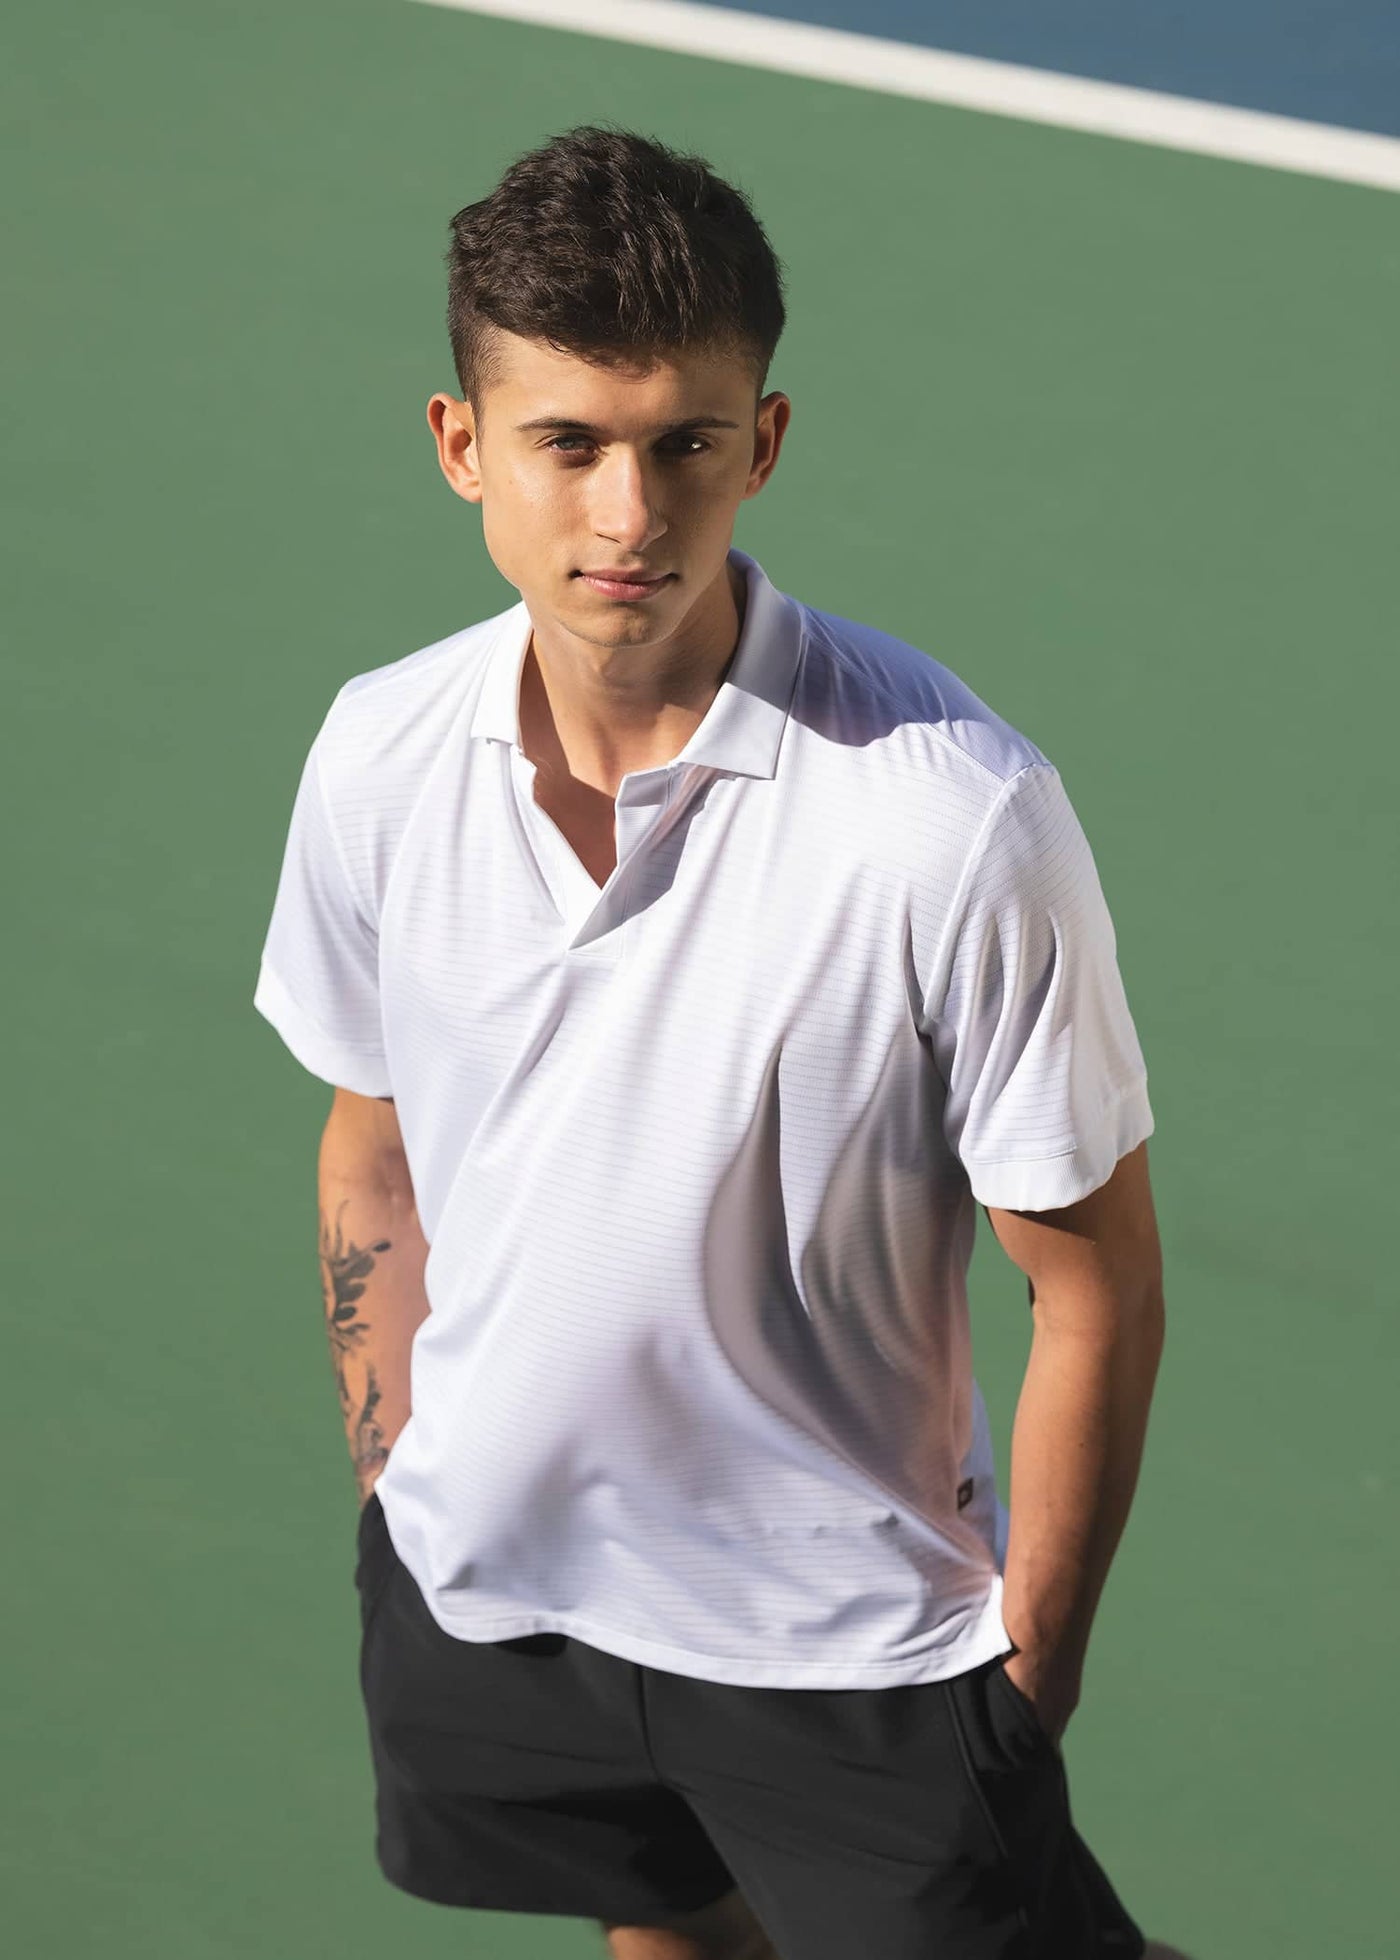 Model in men's tennis polo shirt named after Daniil Medvedev